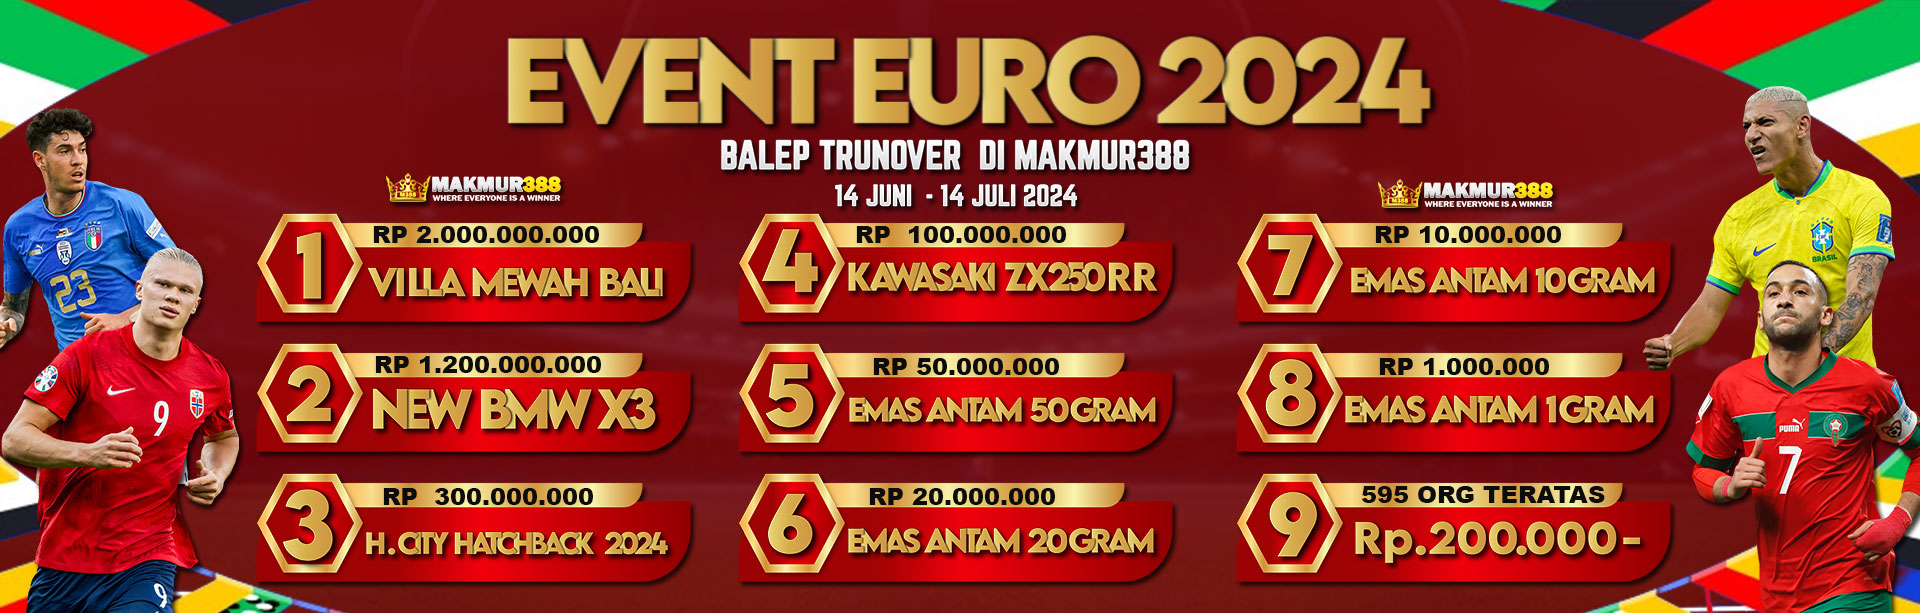 Event Balep Trunover Euro 2024